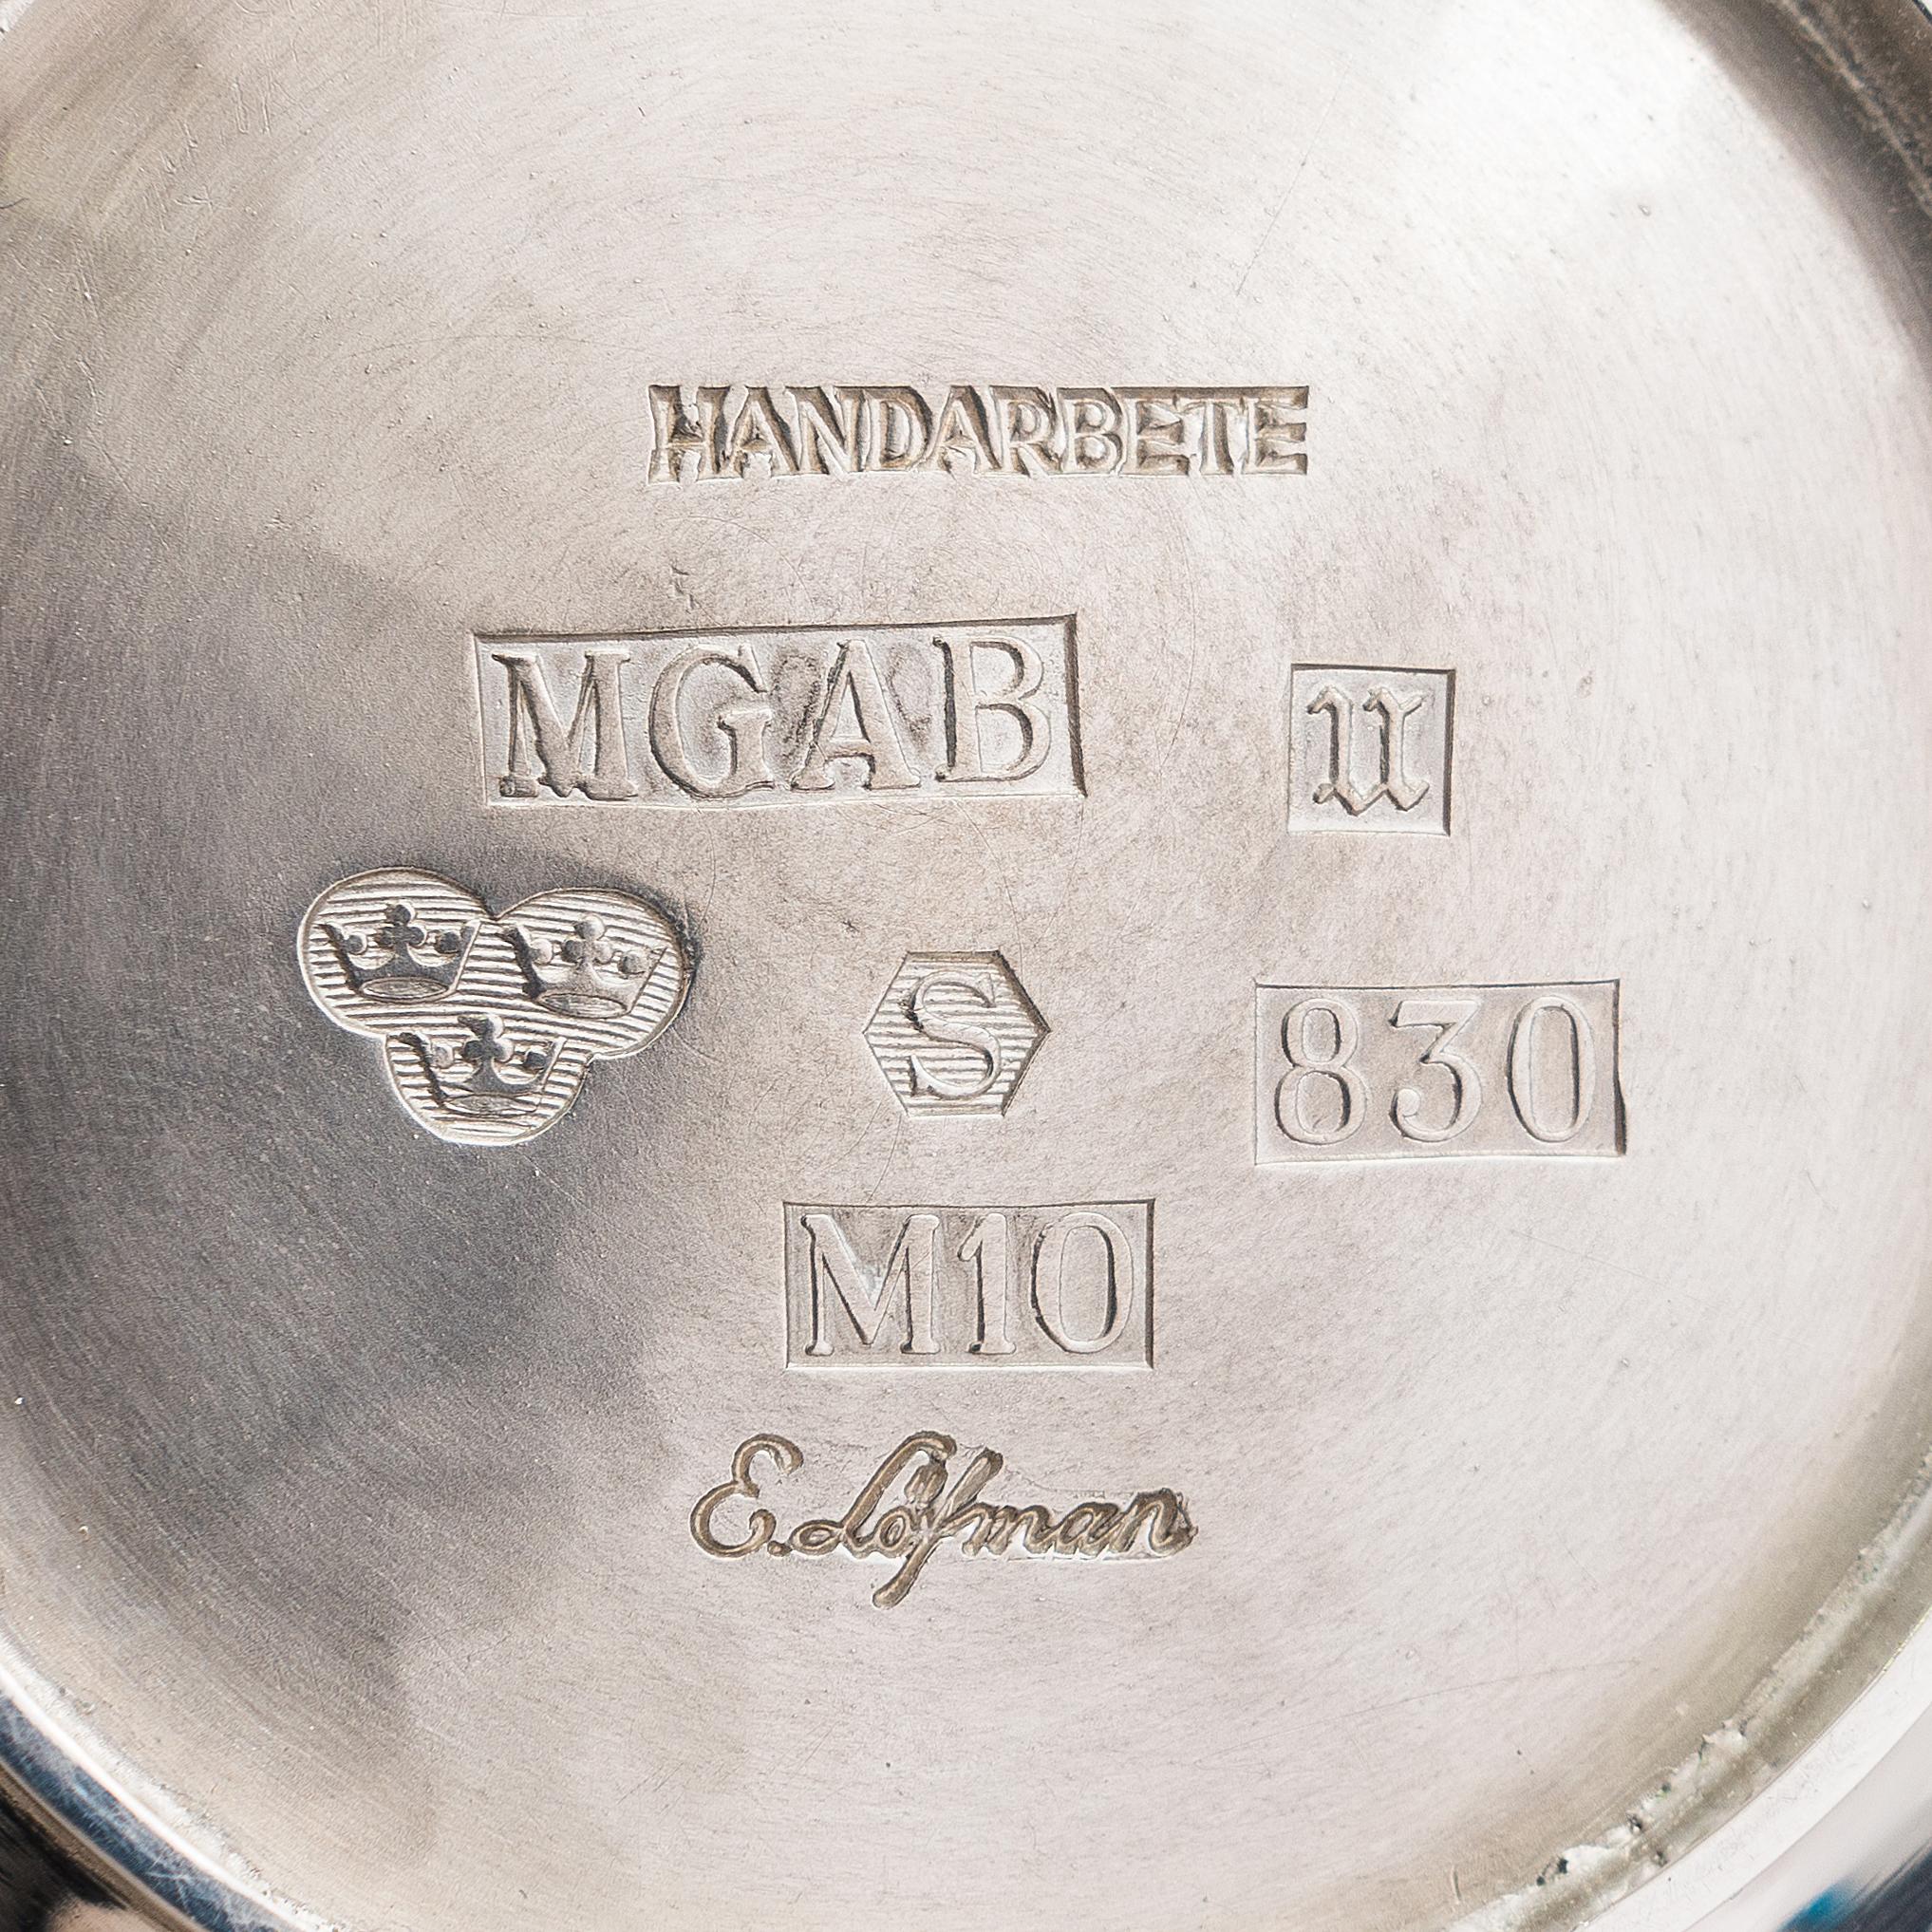 Eric Löfman (Sweden, 1925-1994)
A Swedish silver bowl, maker's mark of Eric Löfman, MGAB, Uppsala 1986.
Hammered surface, round base. Height 8.5-9.5 cm, diameter ca. 14 cm. Weight 305 g.
Insignificant wear.